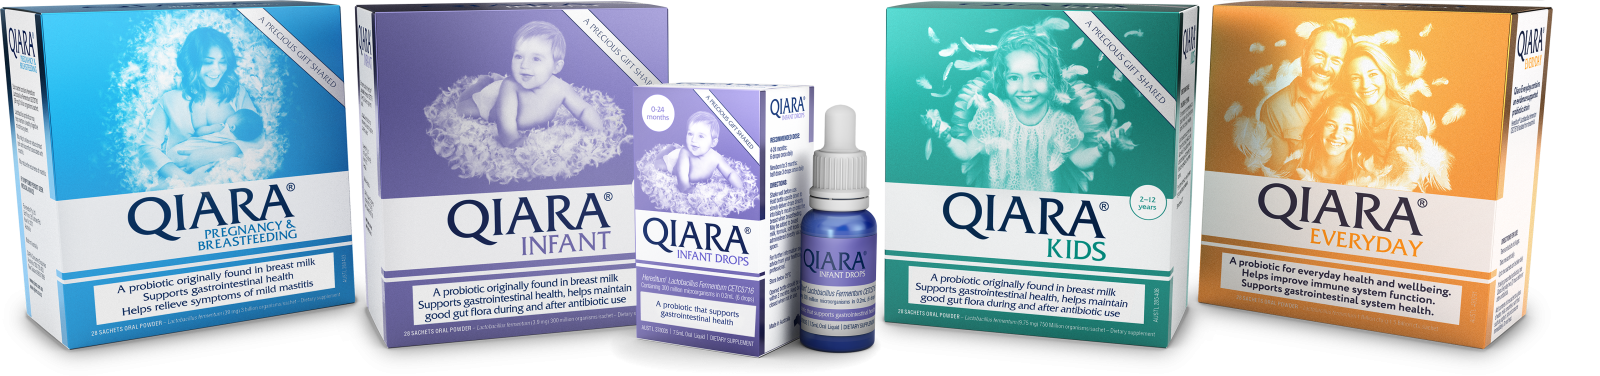 The Qiara Product Range